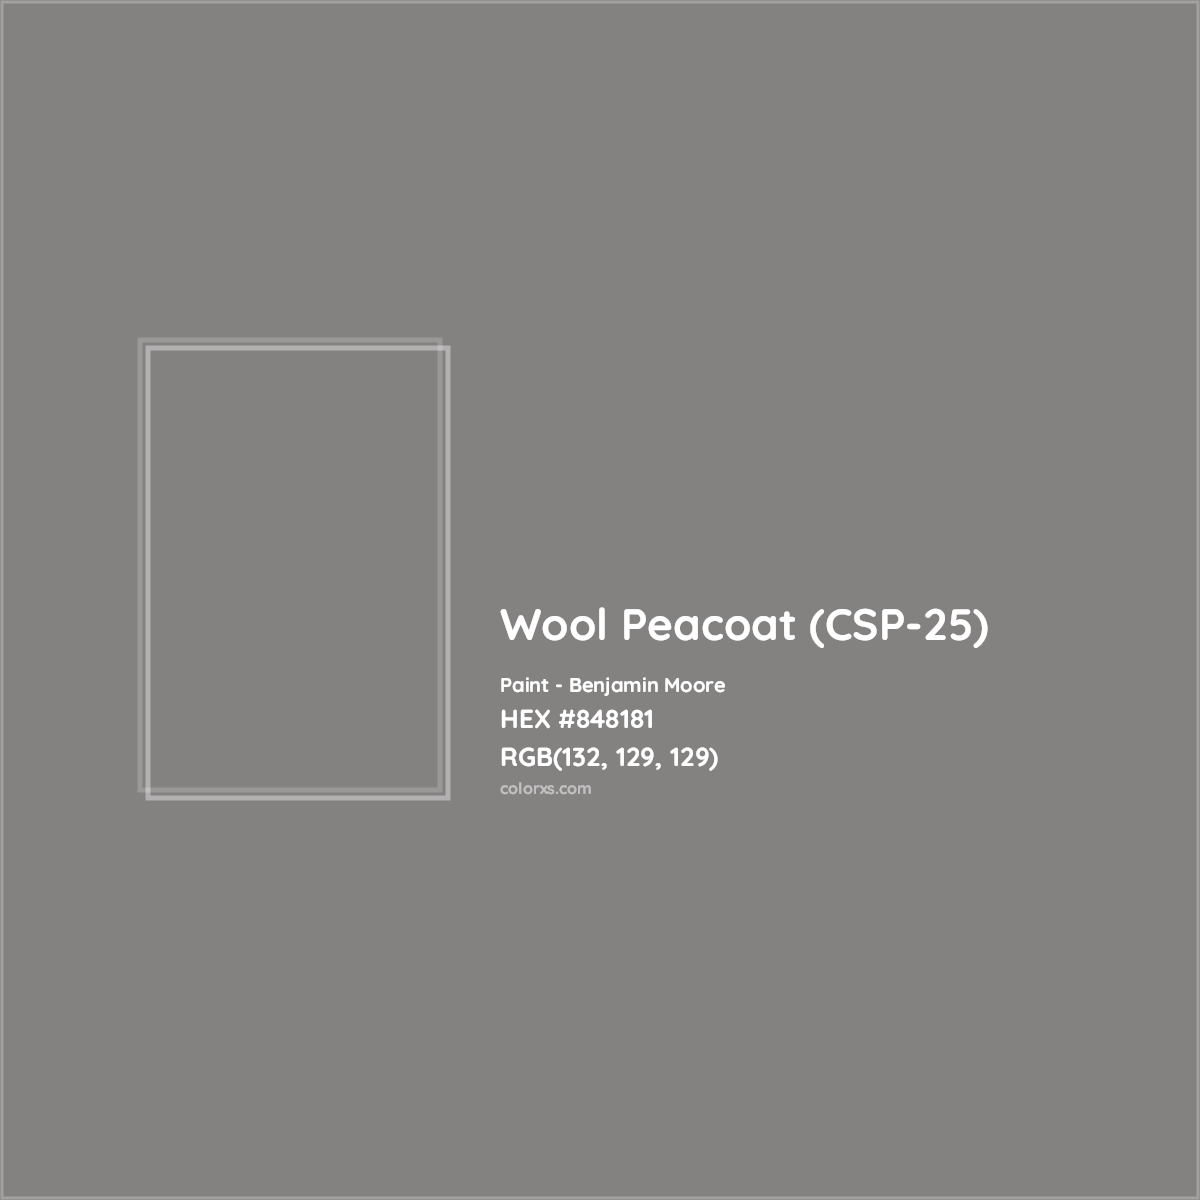 HEX #848181 Wool Peacoat (CSP-25) Paint Benjamin Moore - Color Code